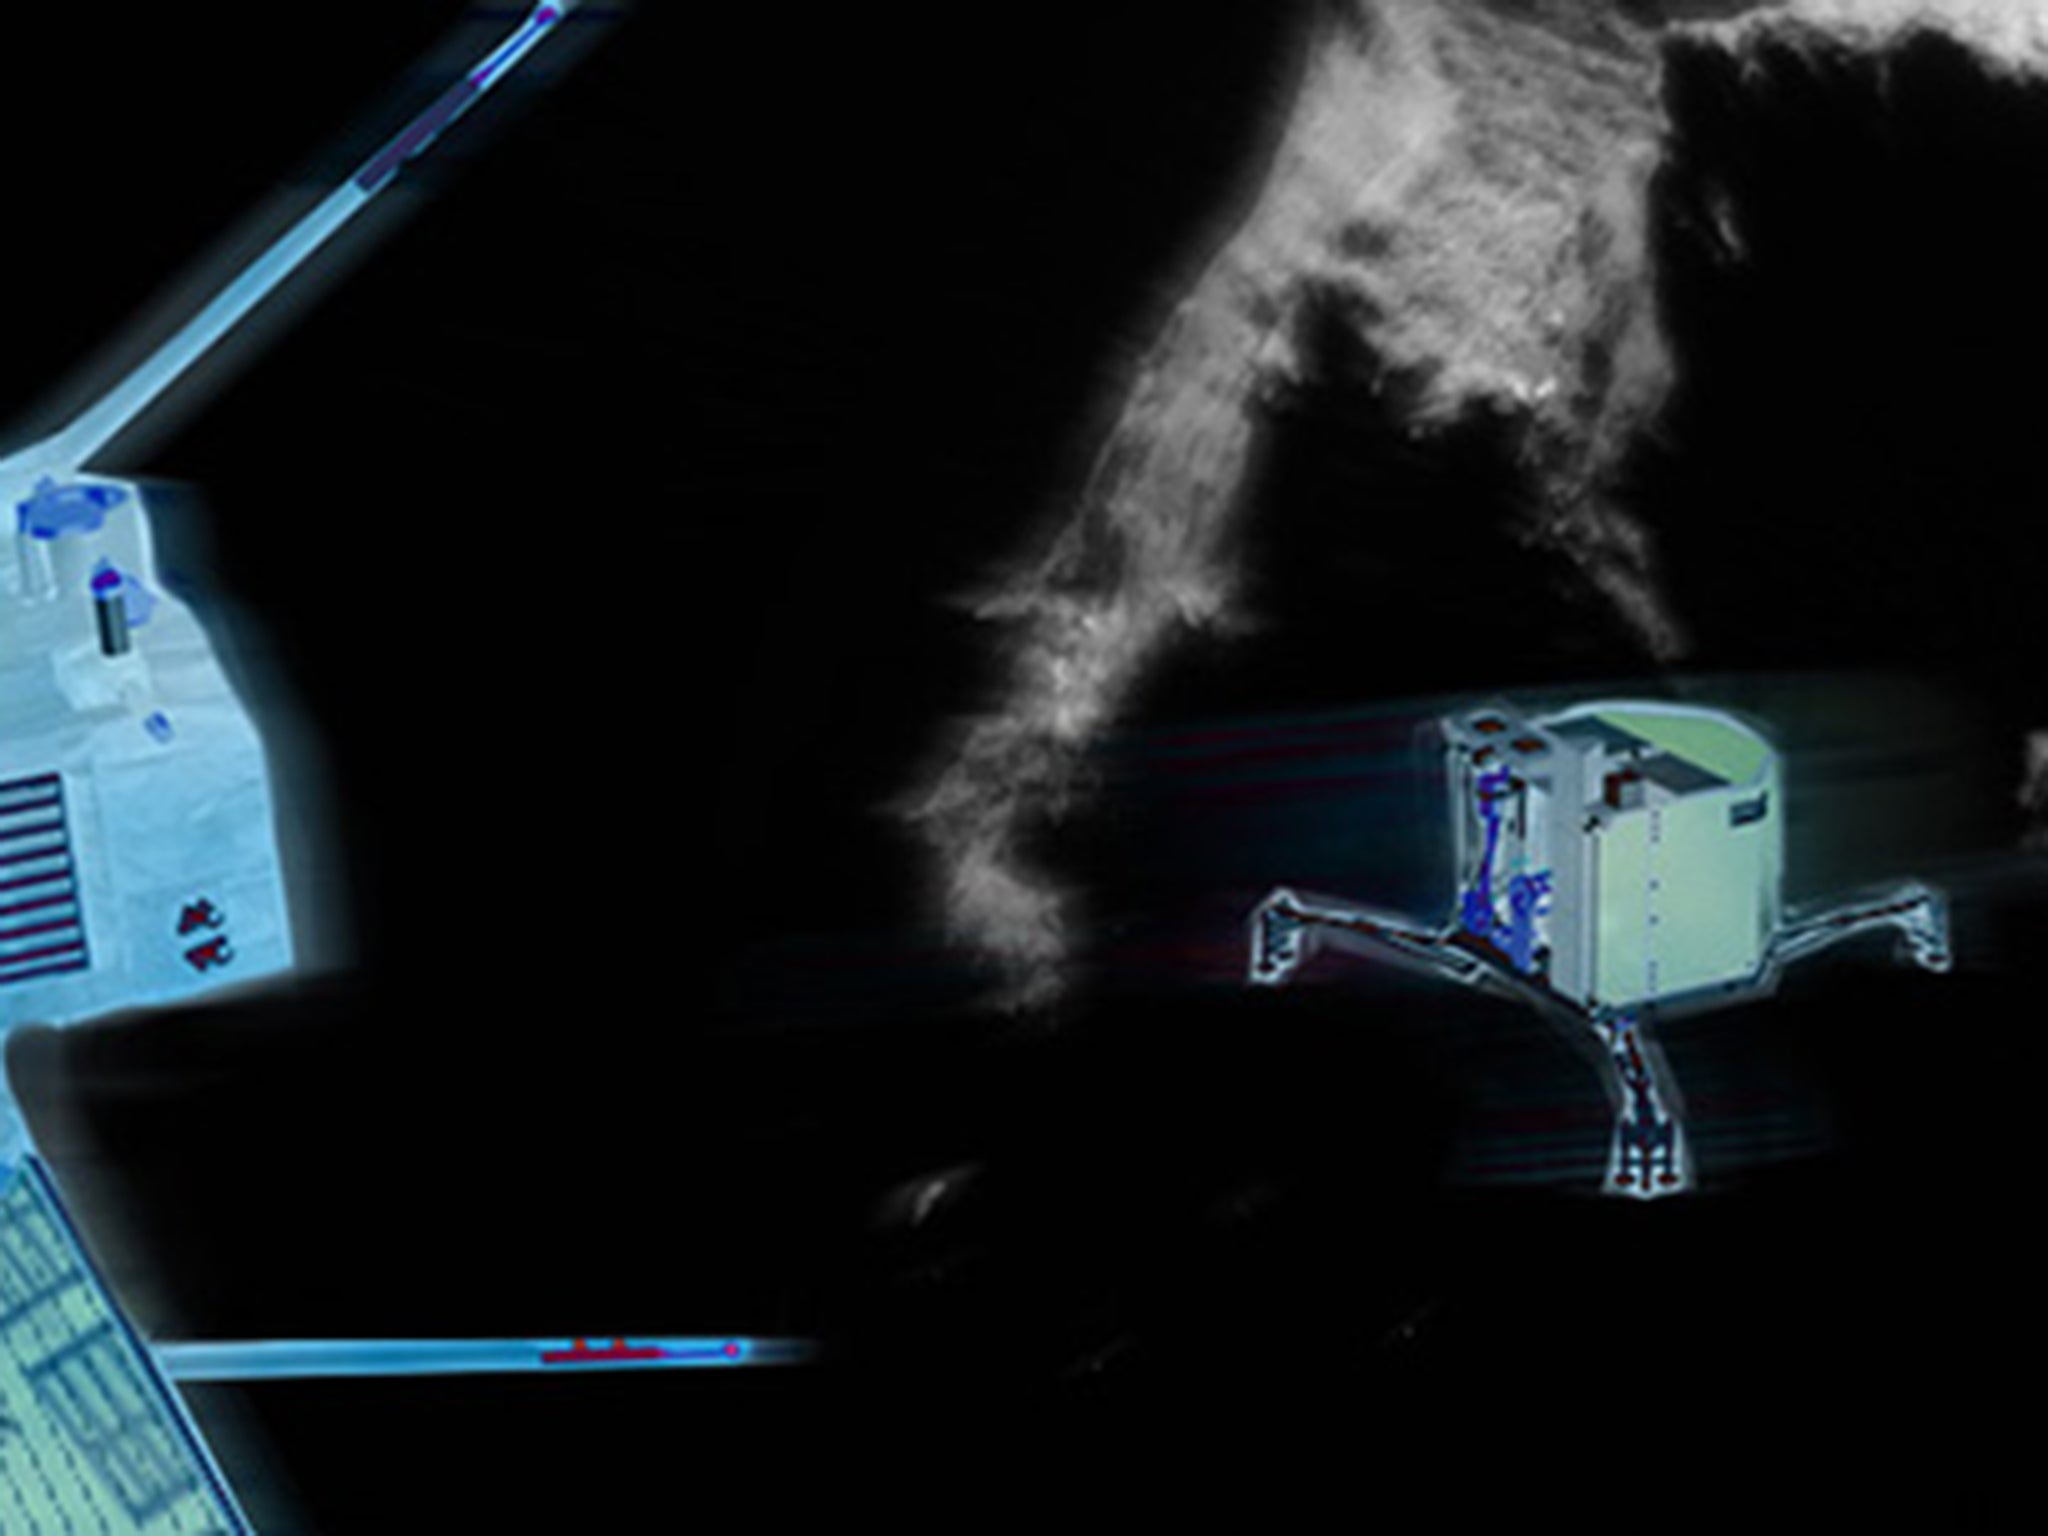 The Rosetta probe